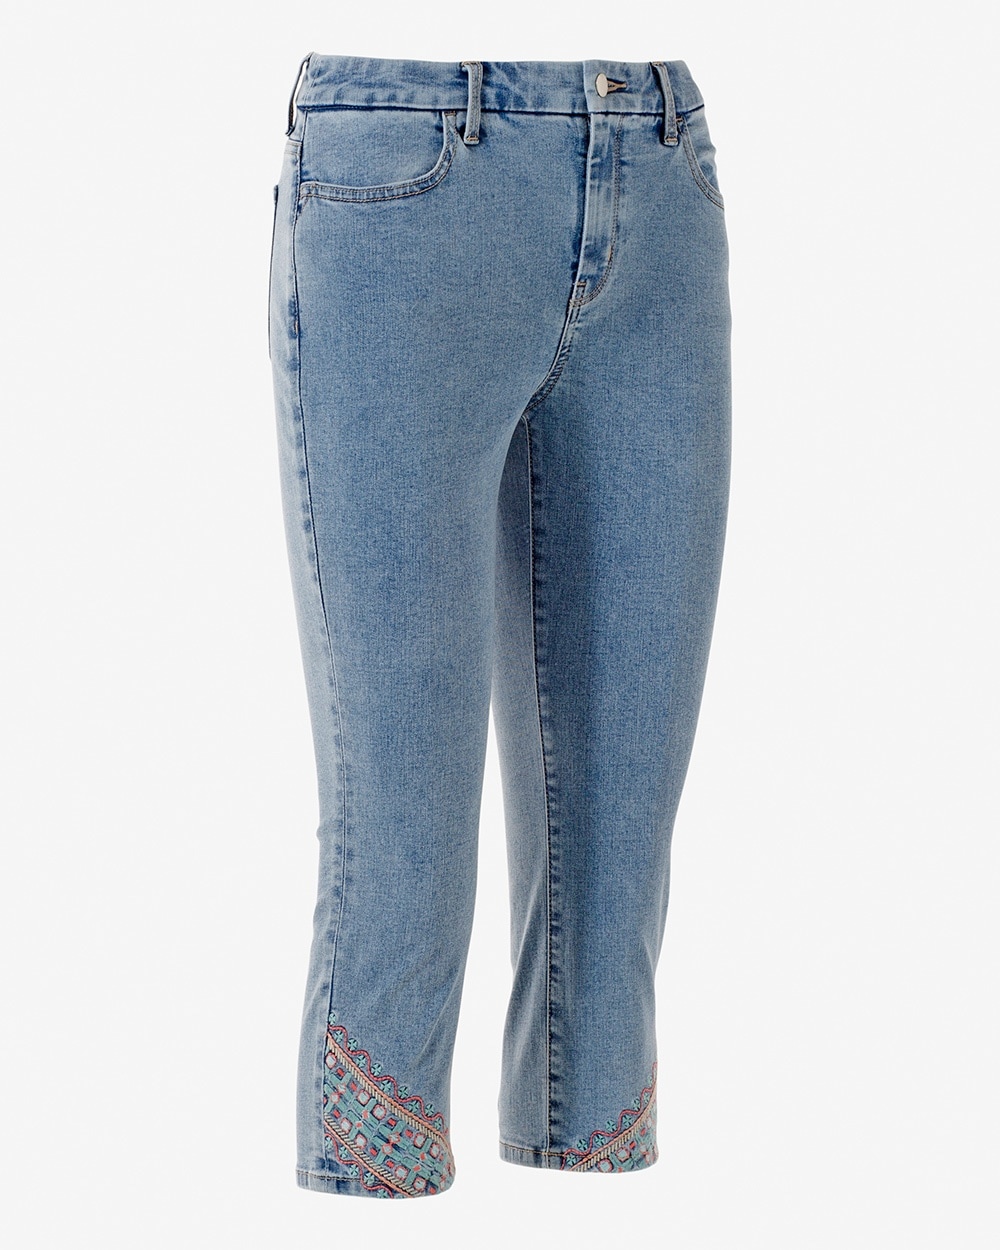 Embroidered Girlfriend Capri Jeans